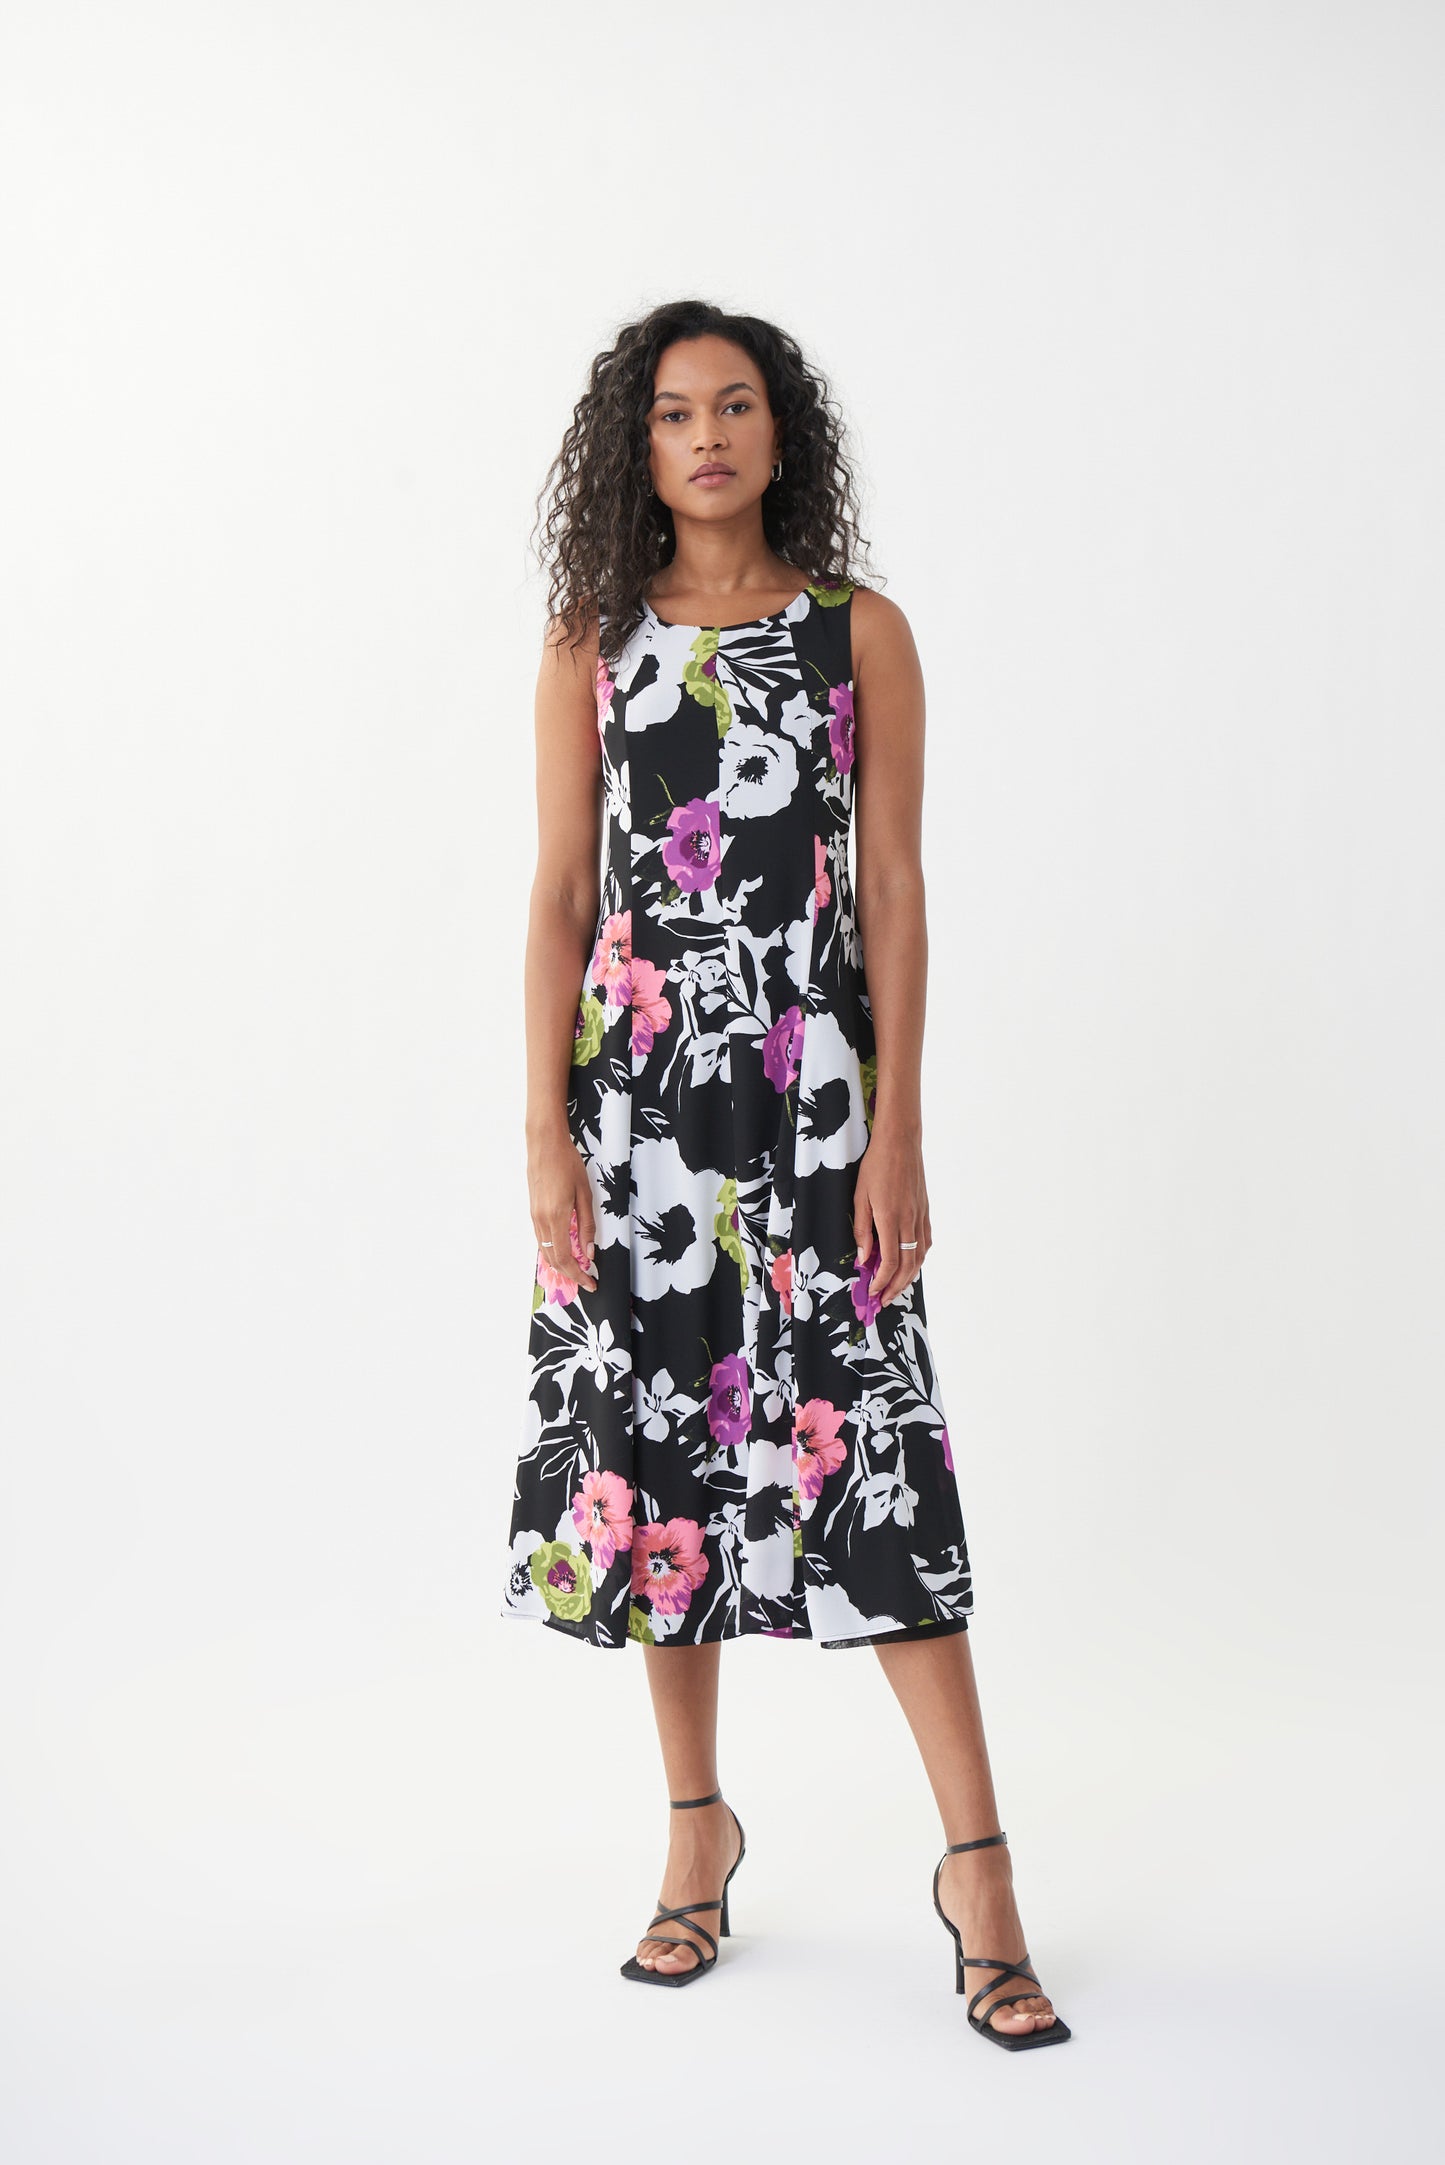 Joseph Ribkoff - Floral Maxi Dress - Style 222258